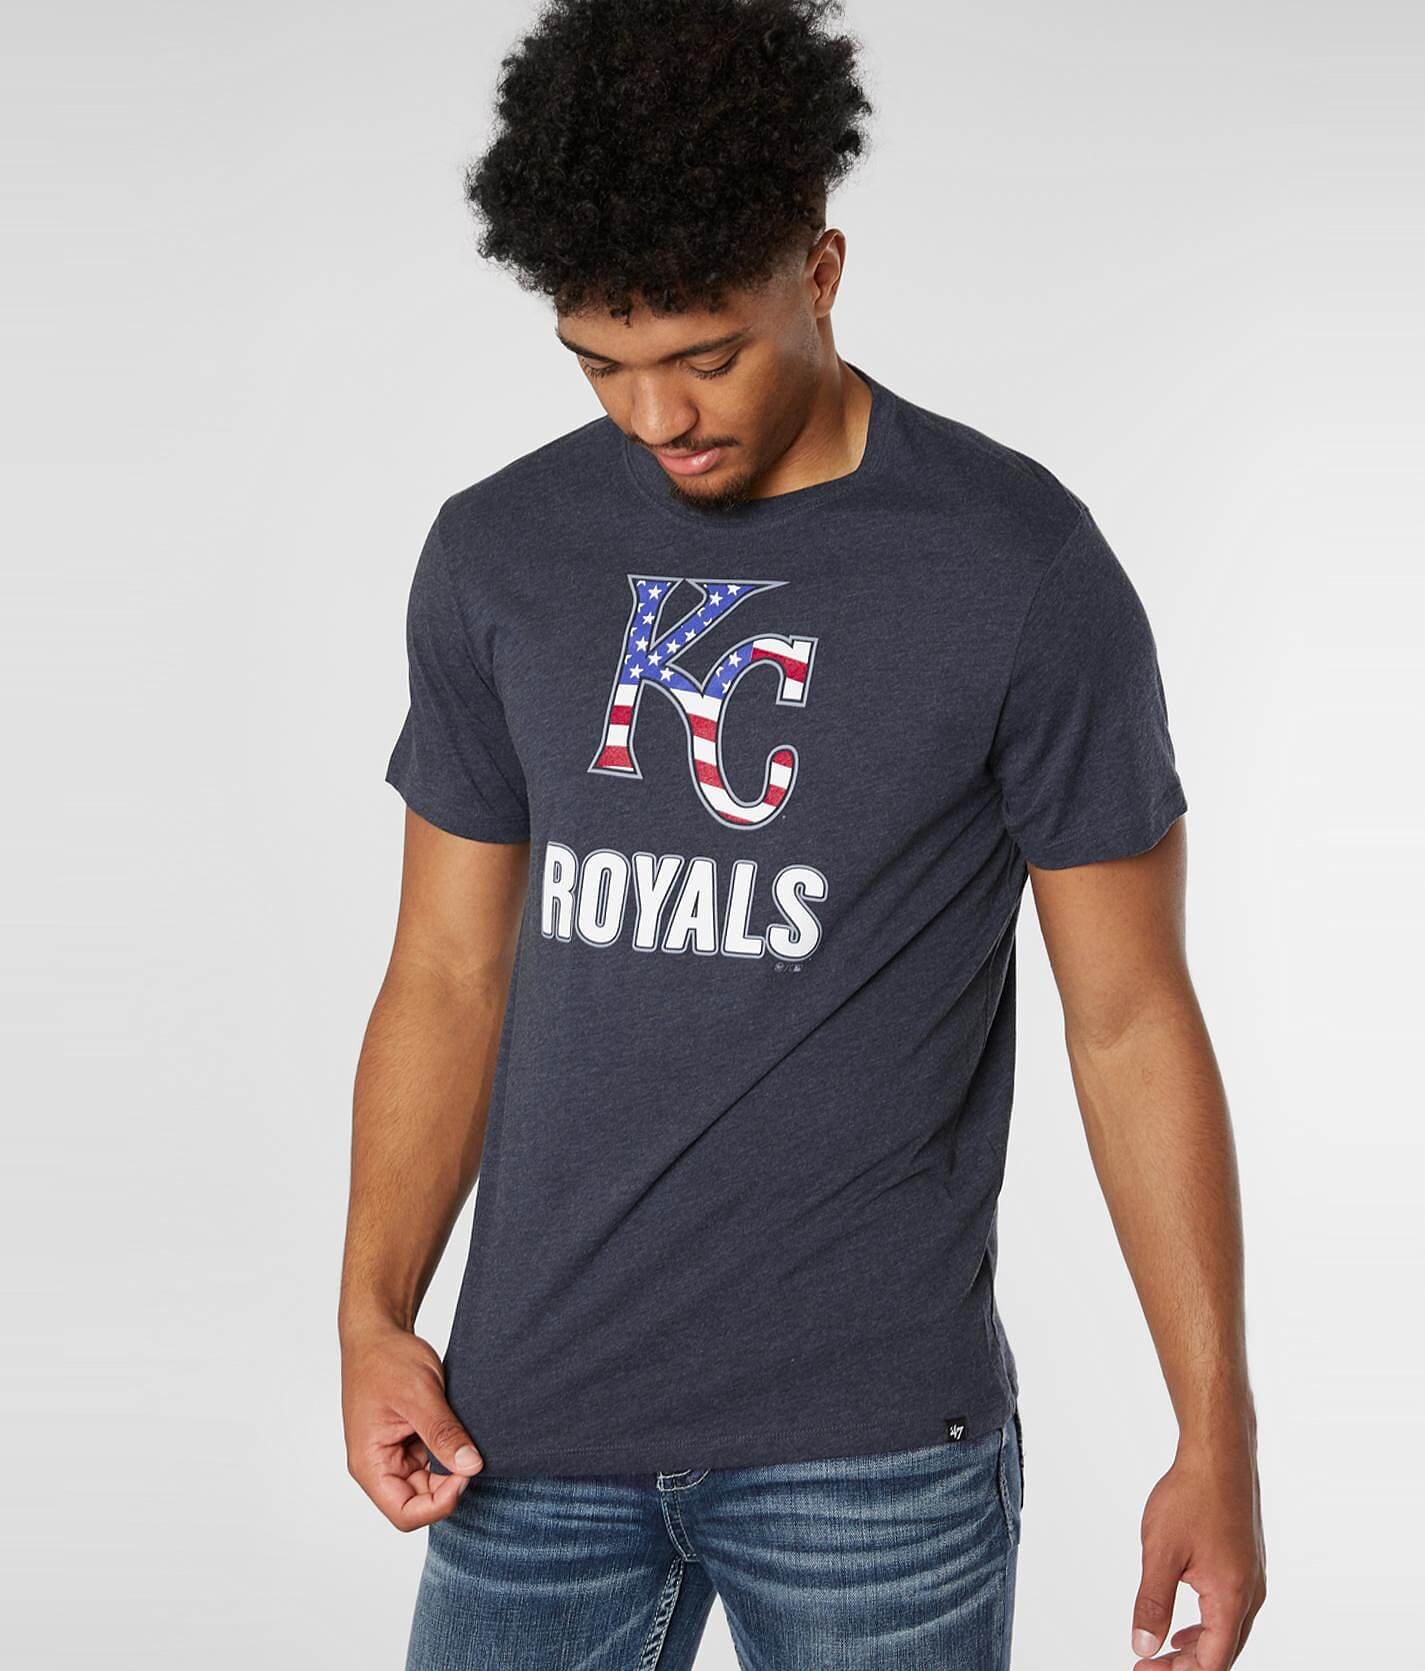 kc royals mens shirts